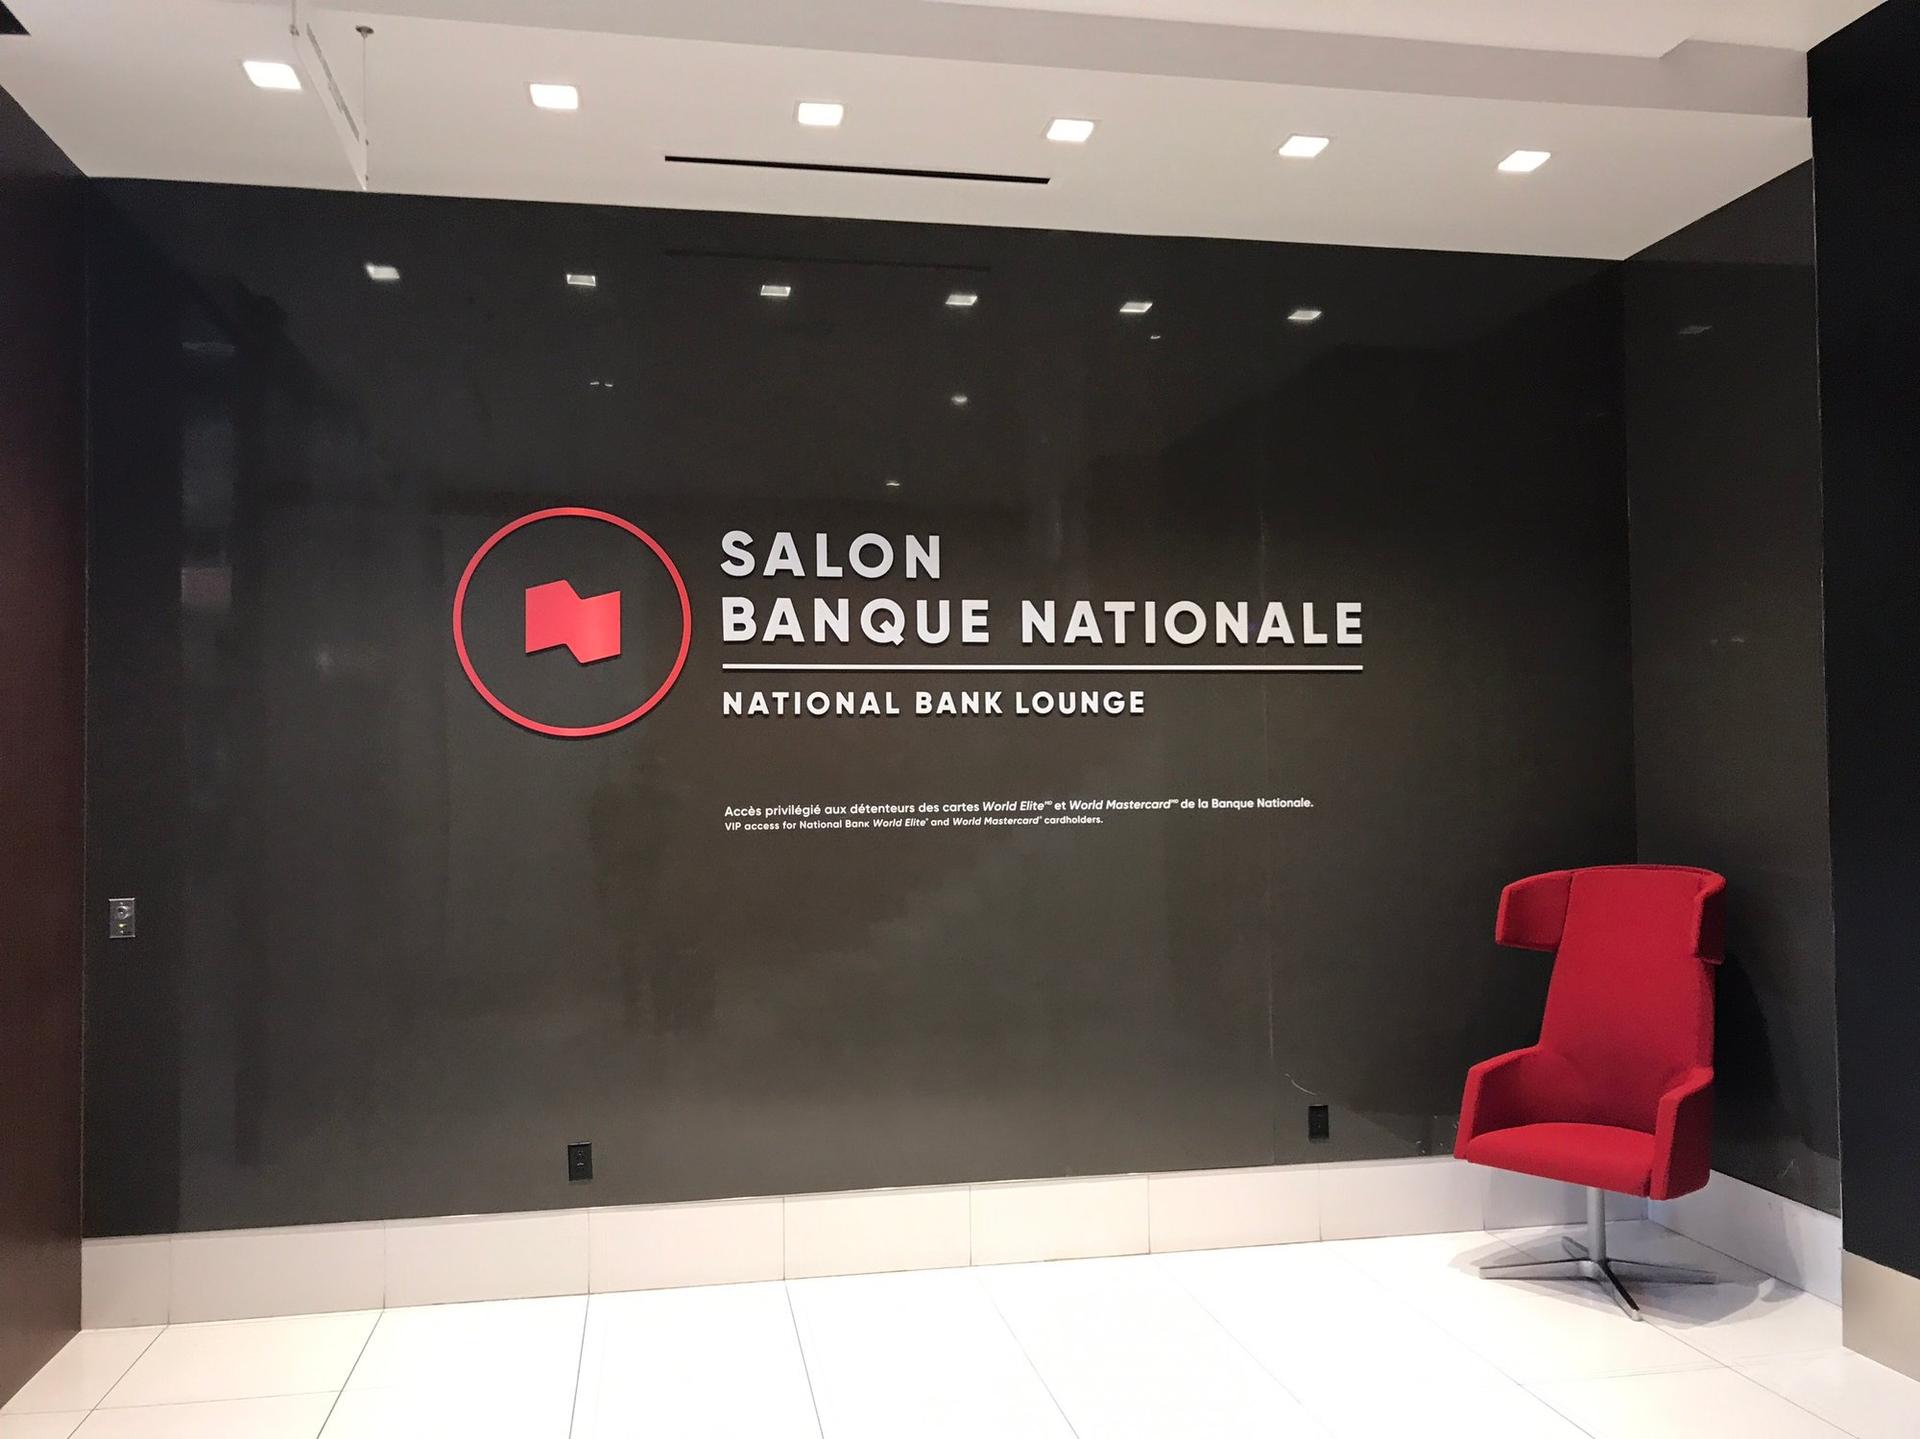 Montreal National Bank World Mastercard Lounge image 1 of 21